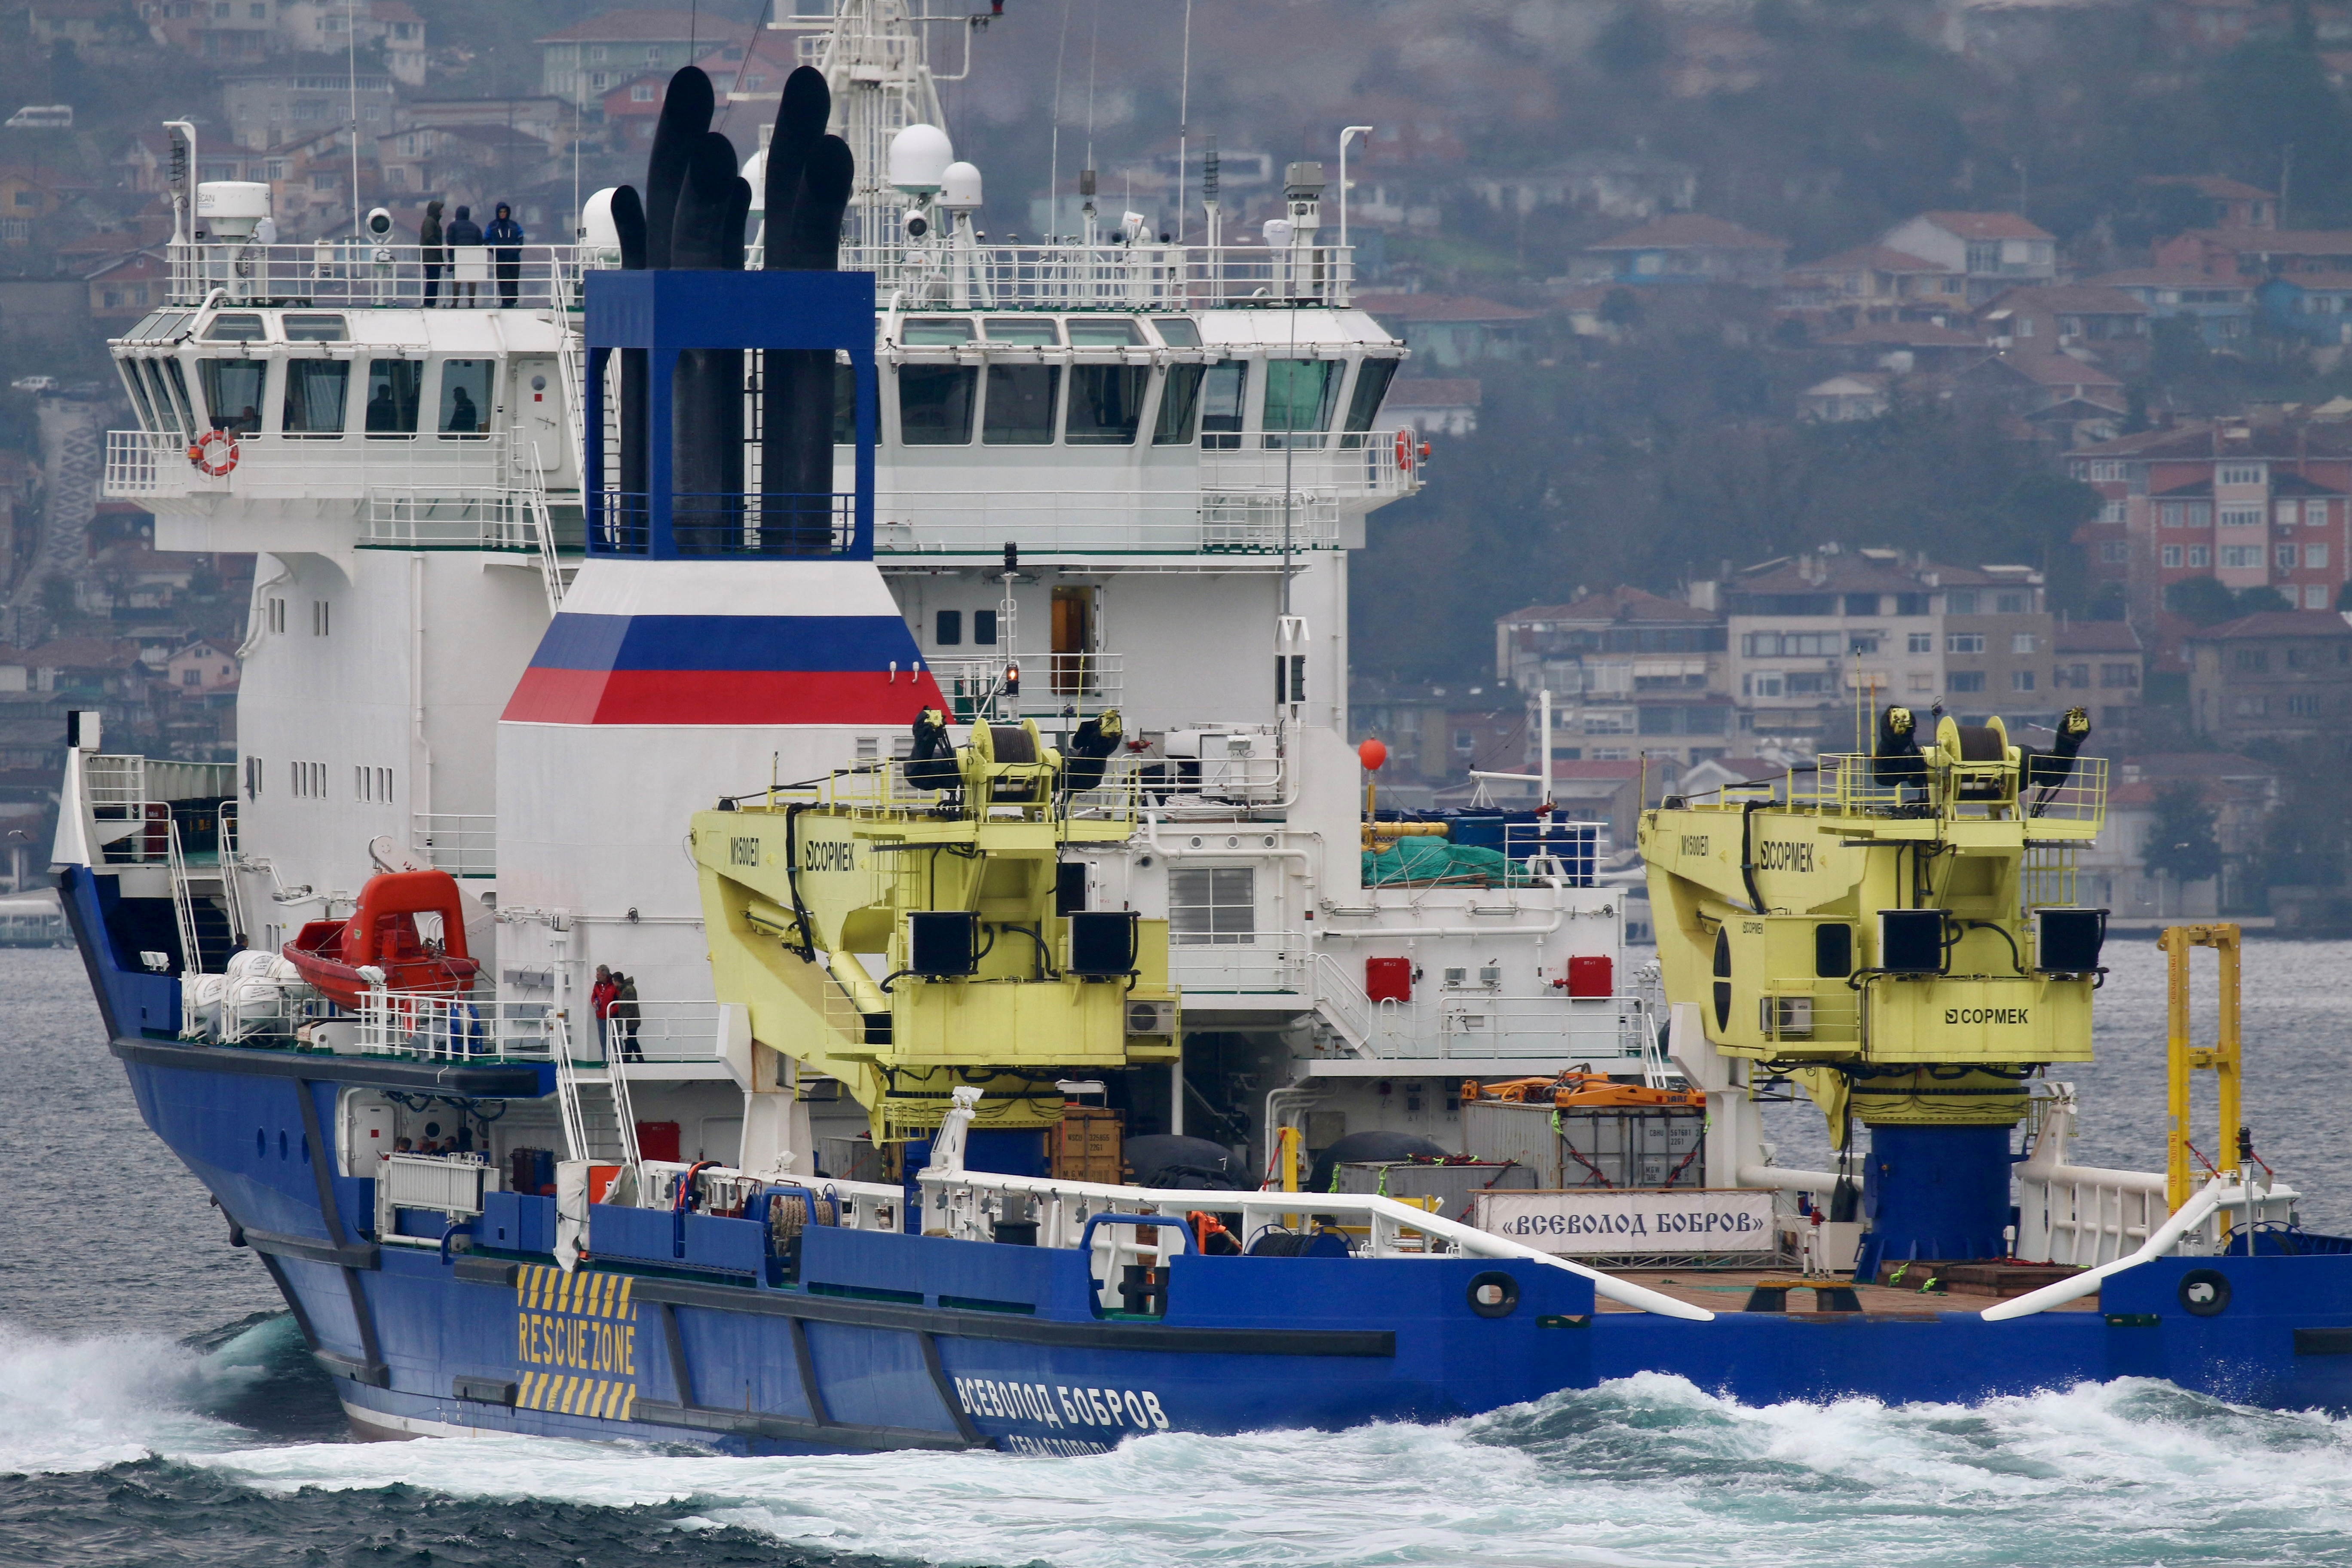 Russian Navy's Black Sea Fleet logistics support ship Vsevolod Bobrov sails in Istanbul's Bosphorus